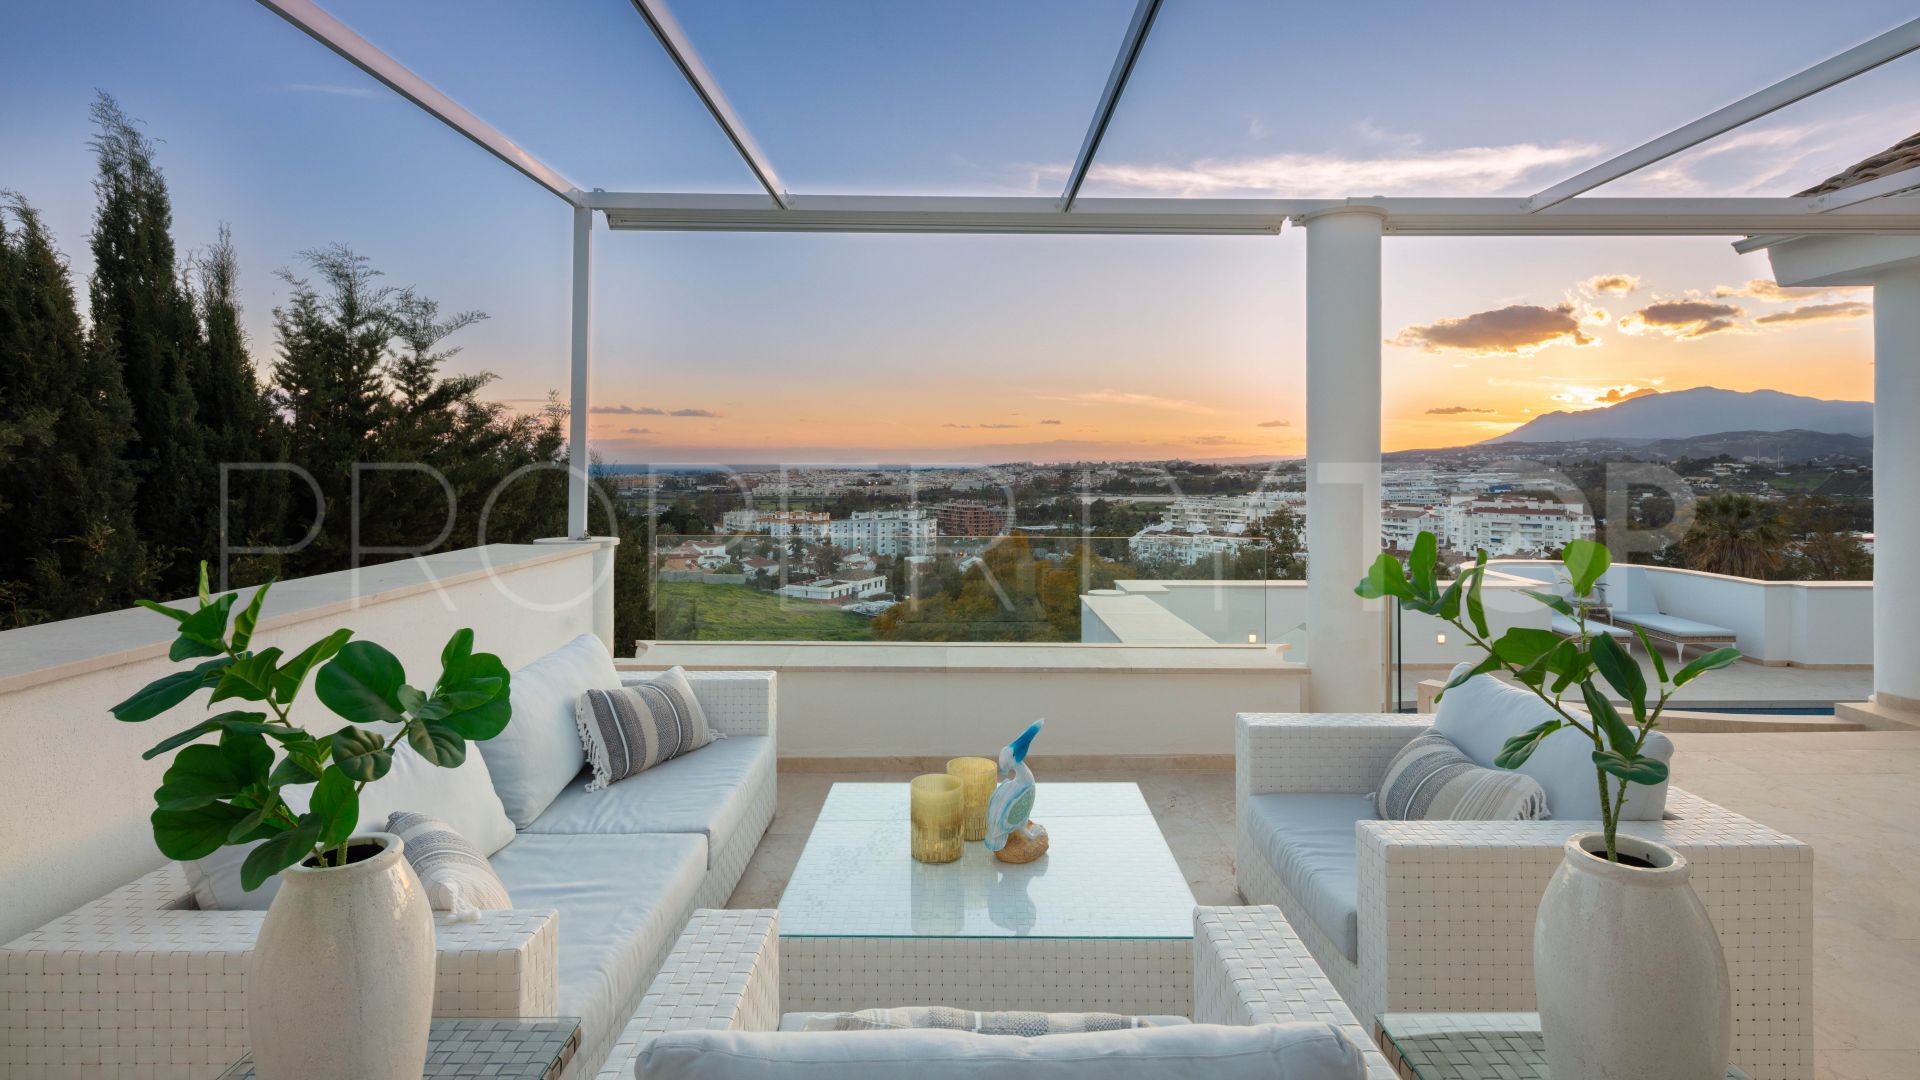 3 bedrooms villa in Nueva Andalucia for sale